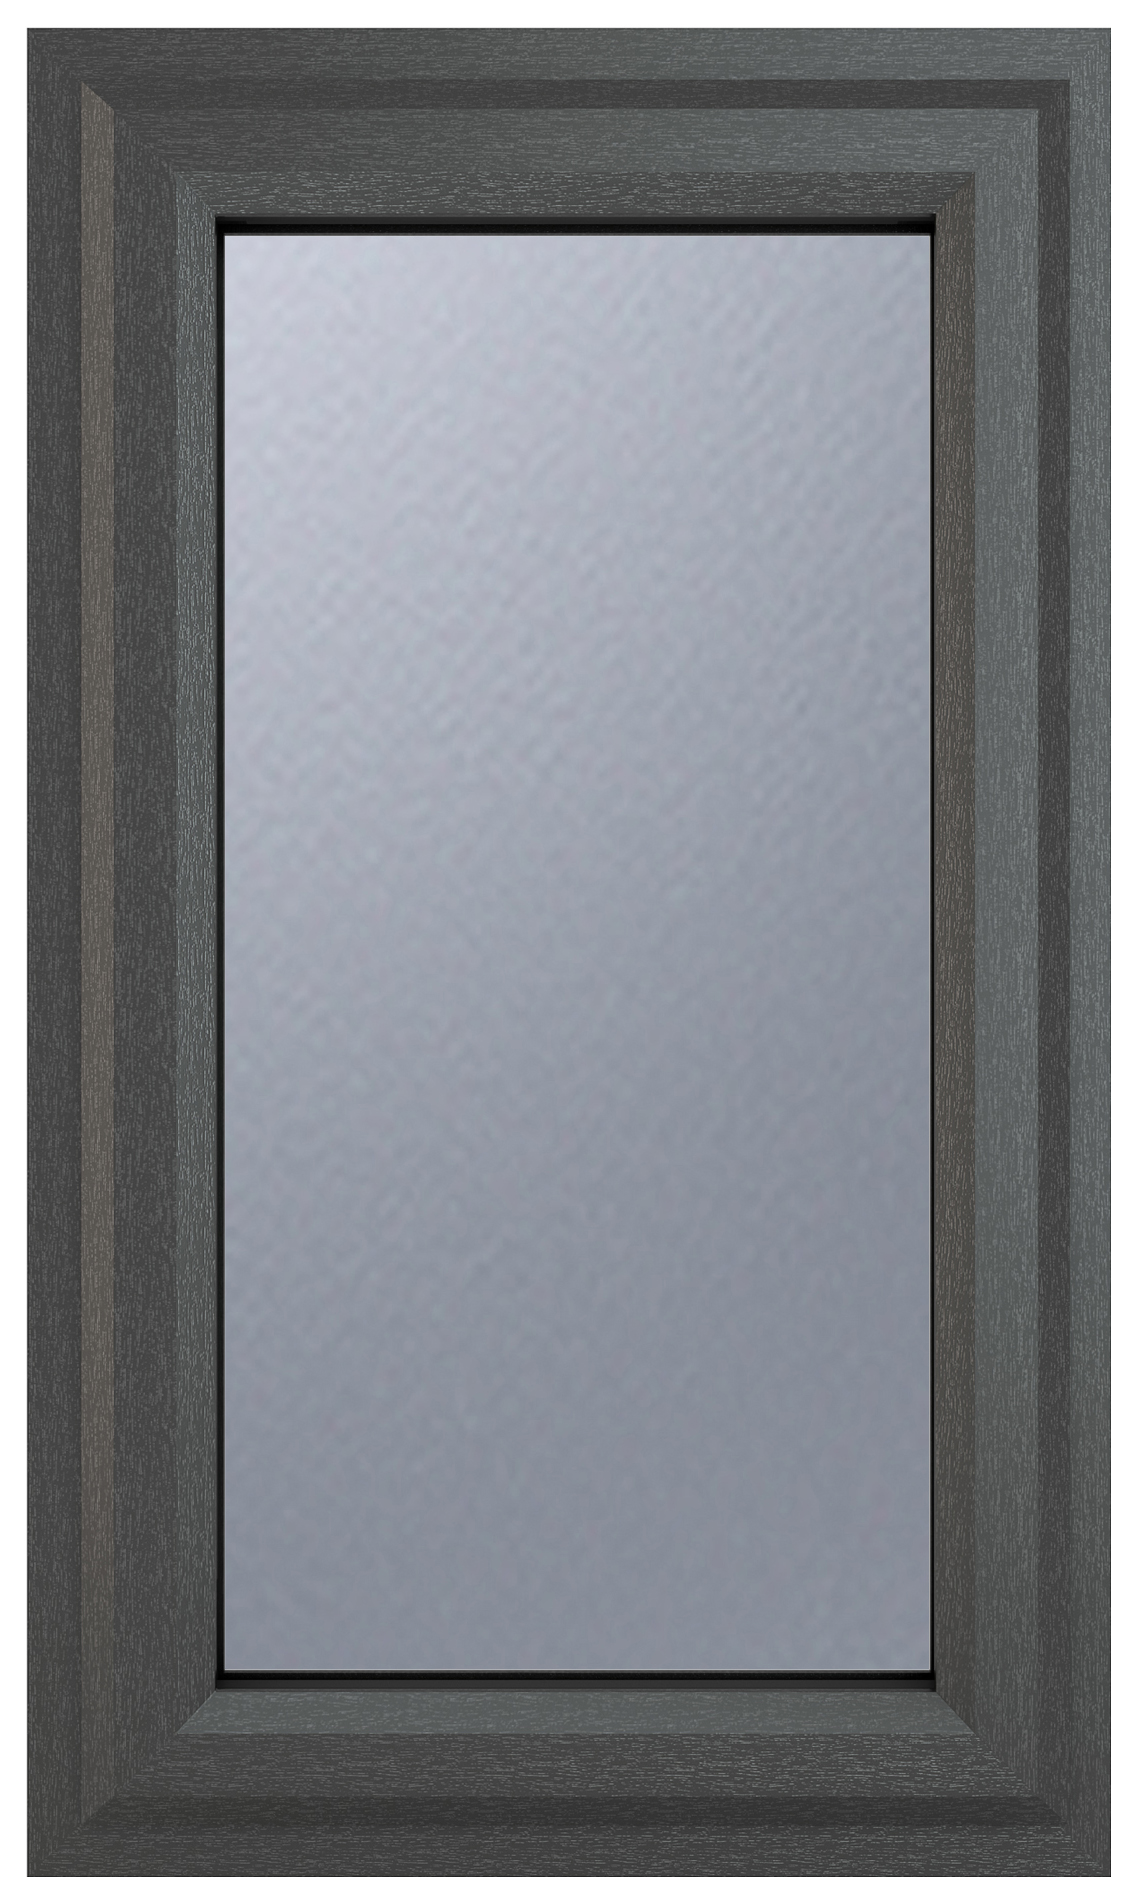 Crystal uPVC Grey Left Hung Obscure Double Glazed Window - 610 x 820mm